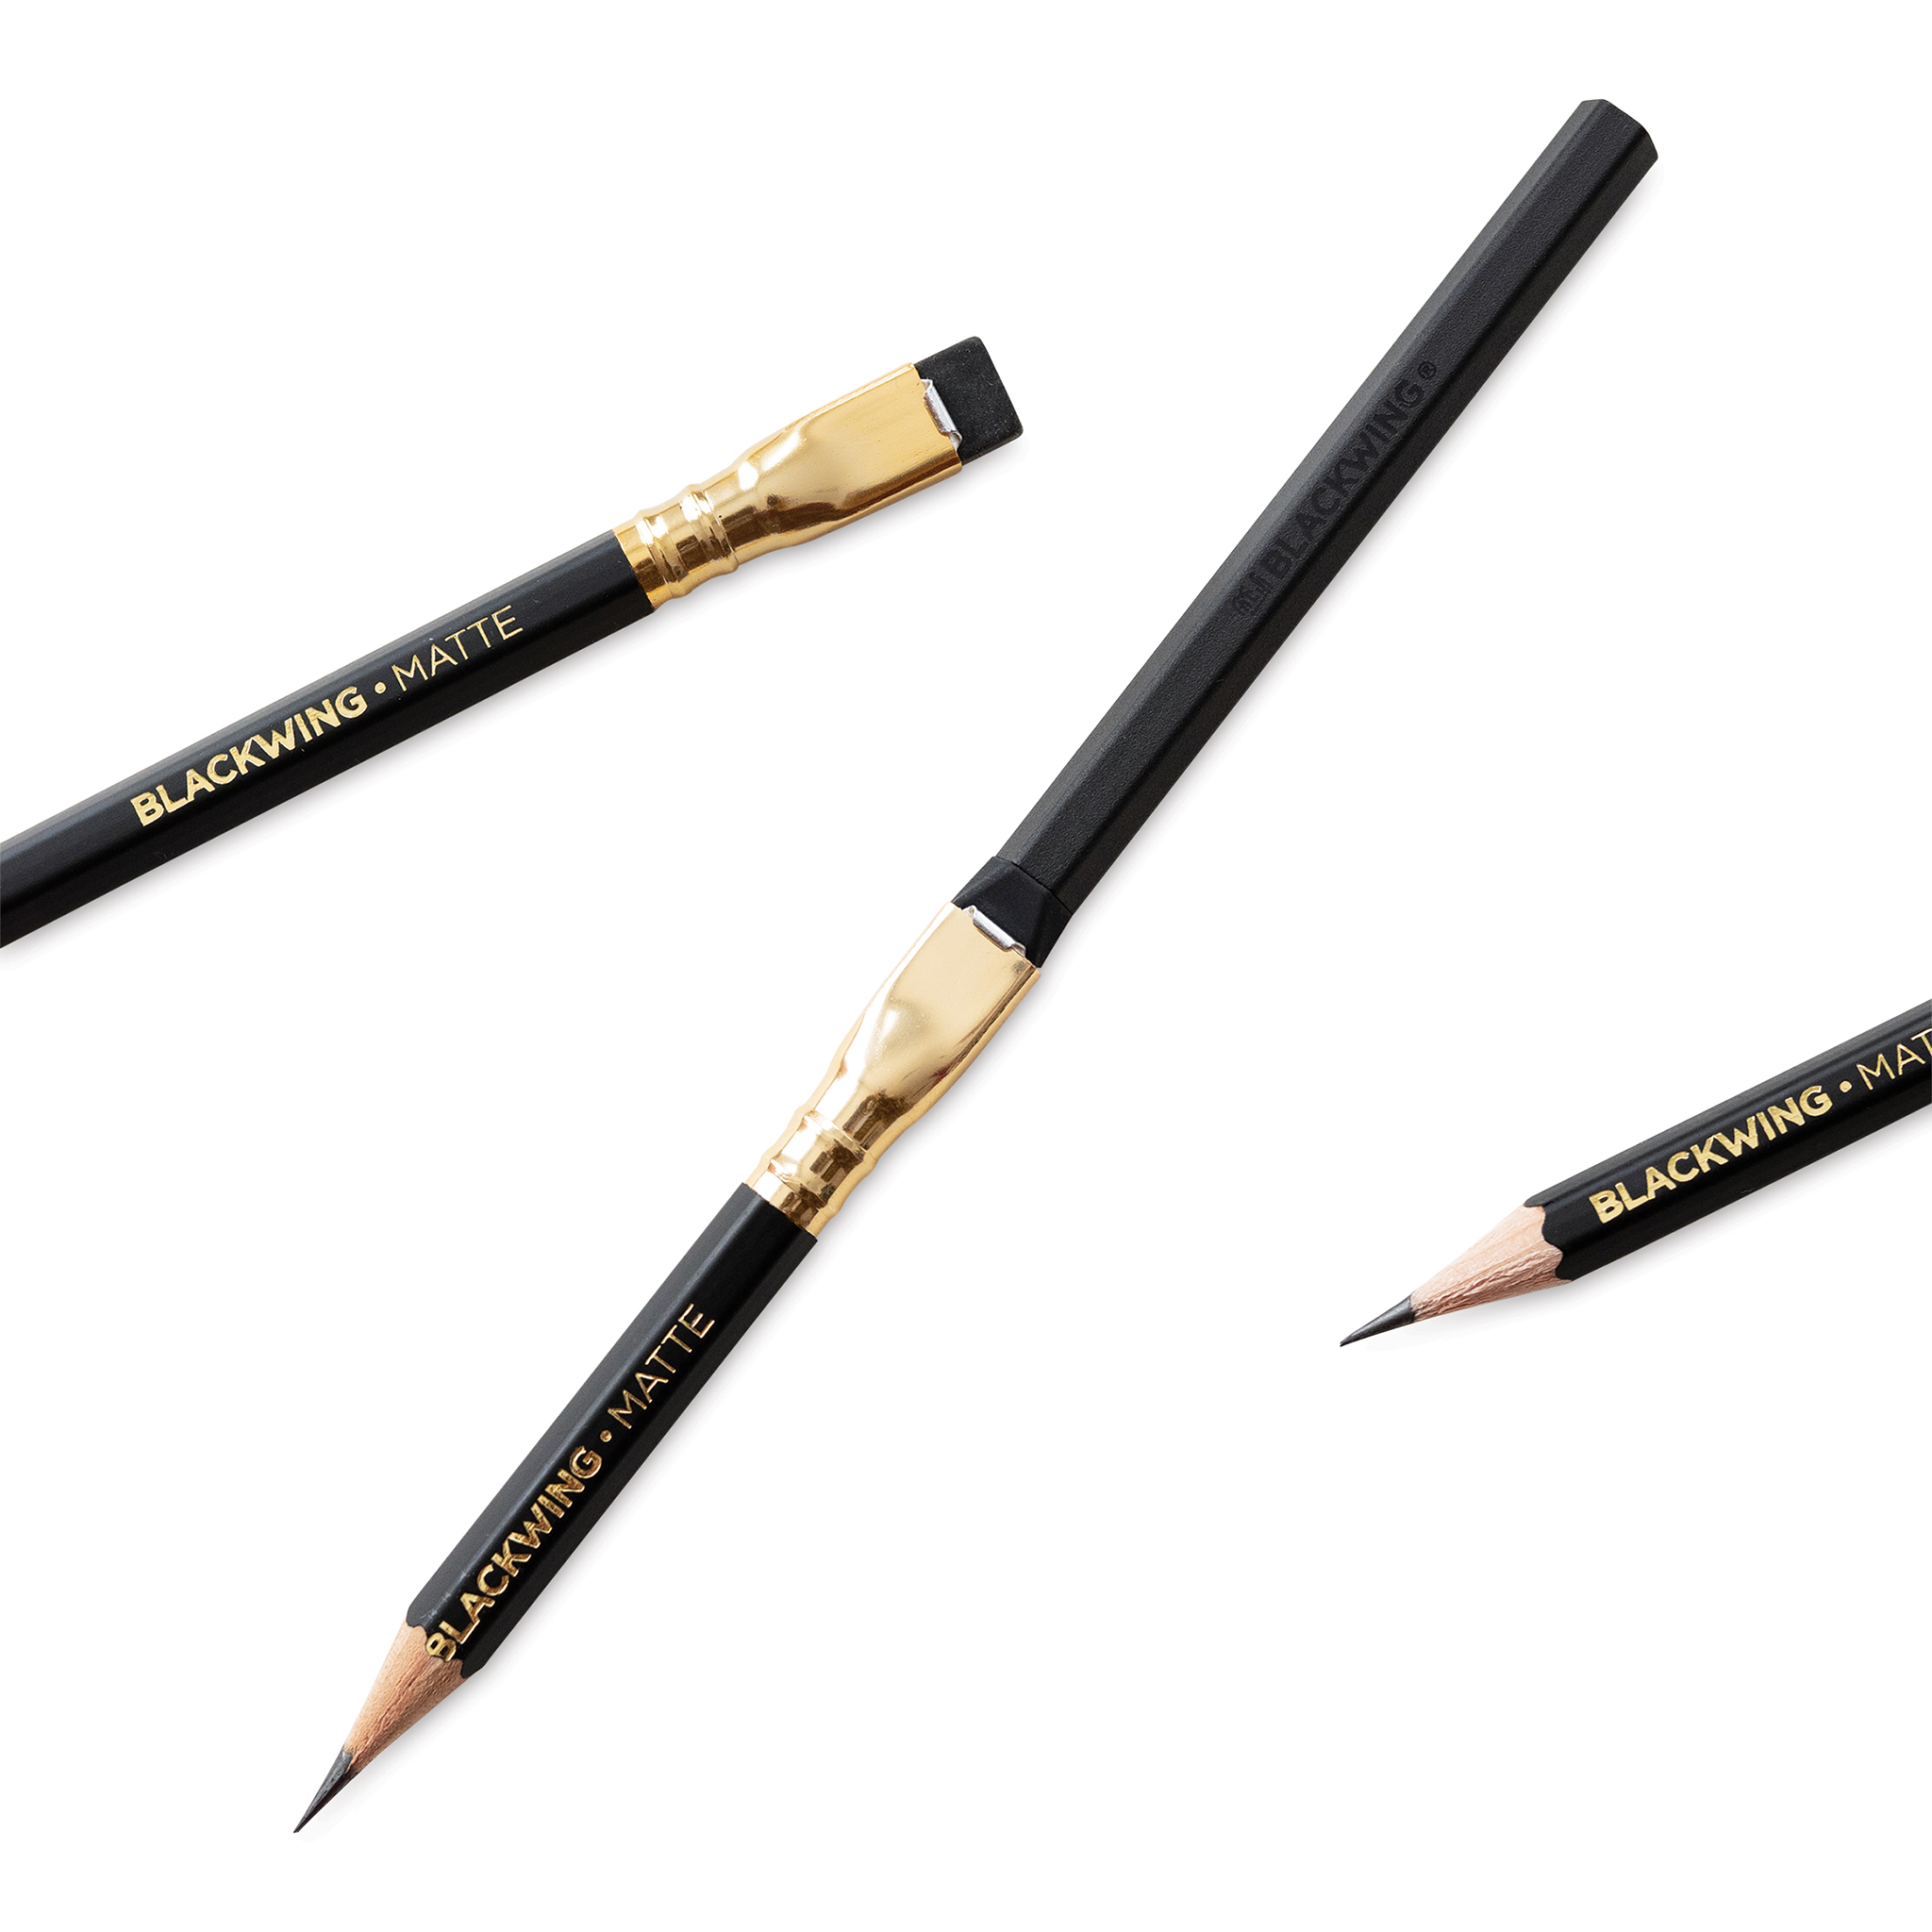 Manatee Bentcil, Bent #2 Pencil - BP317 - Brilliant Promotional Products